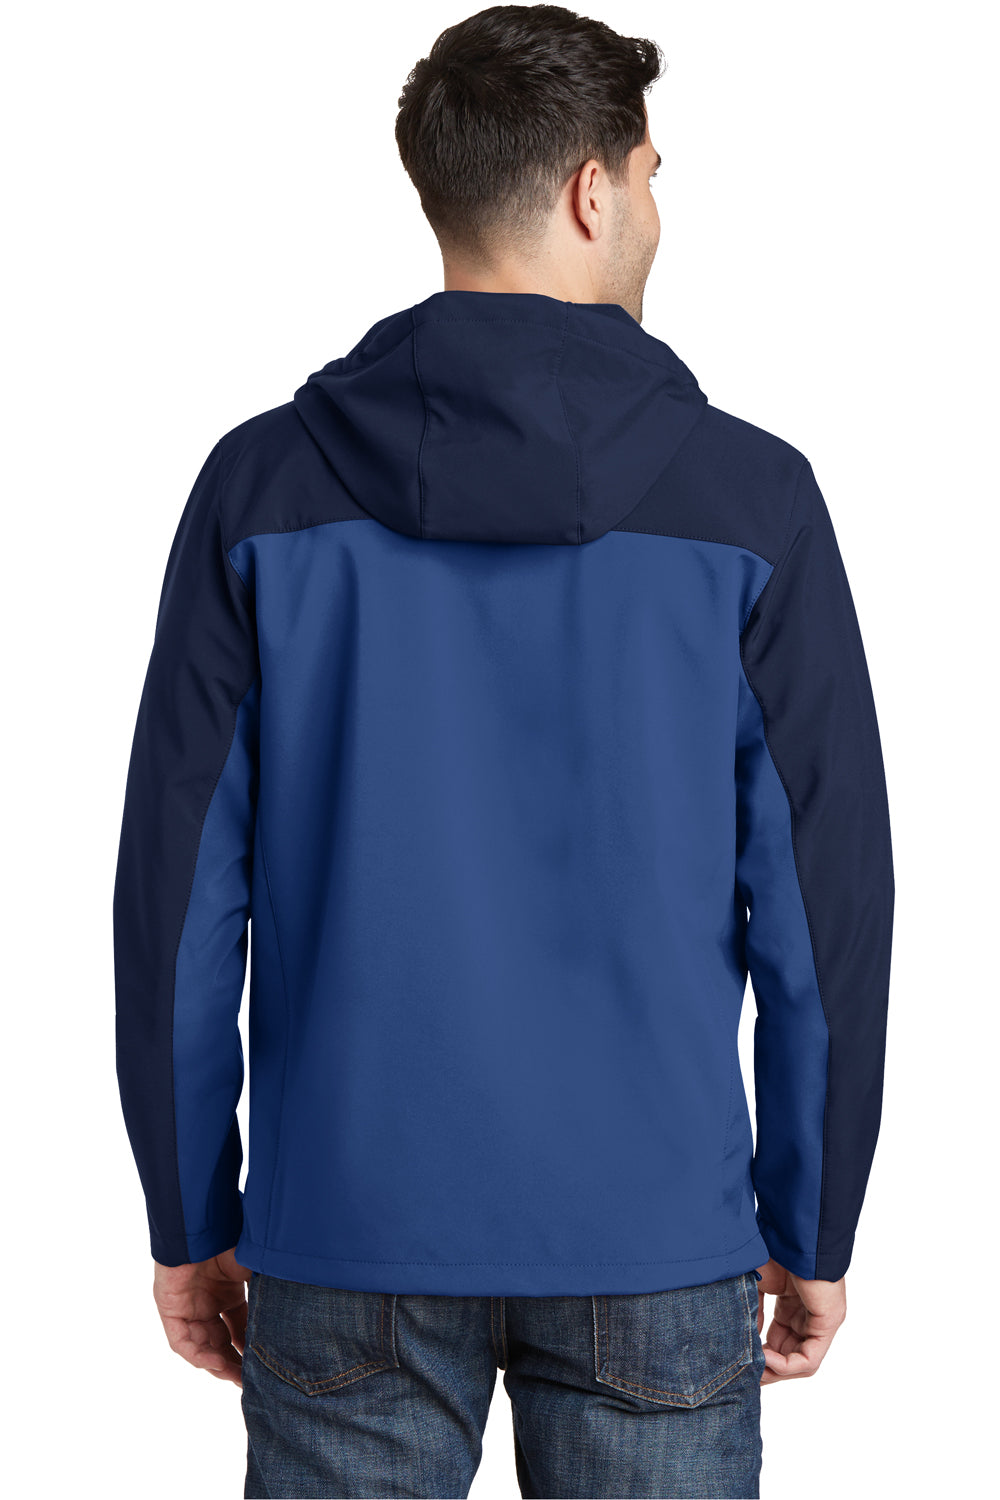 Port Authority J335 Mens Core Wind & Water Resistant Full Zip Hooded Jacket Royal Blue/Navy Blue Back